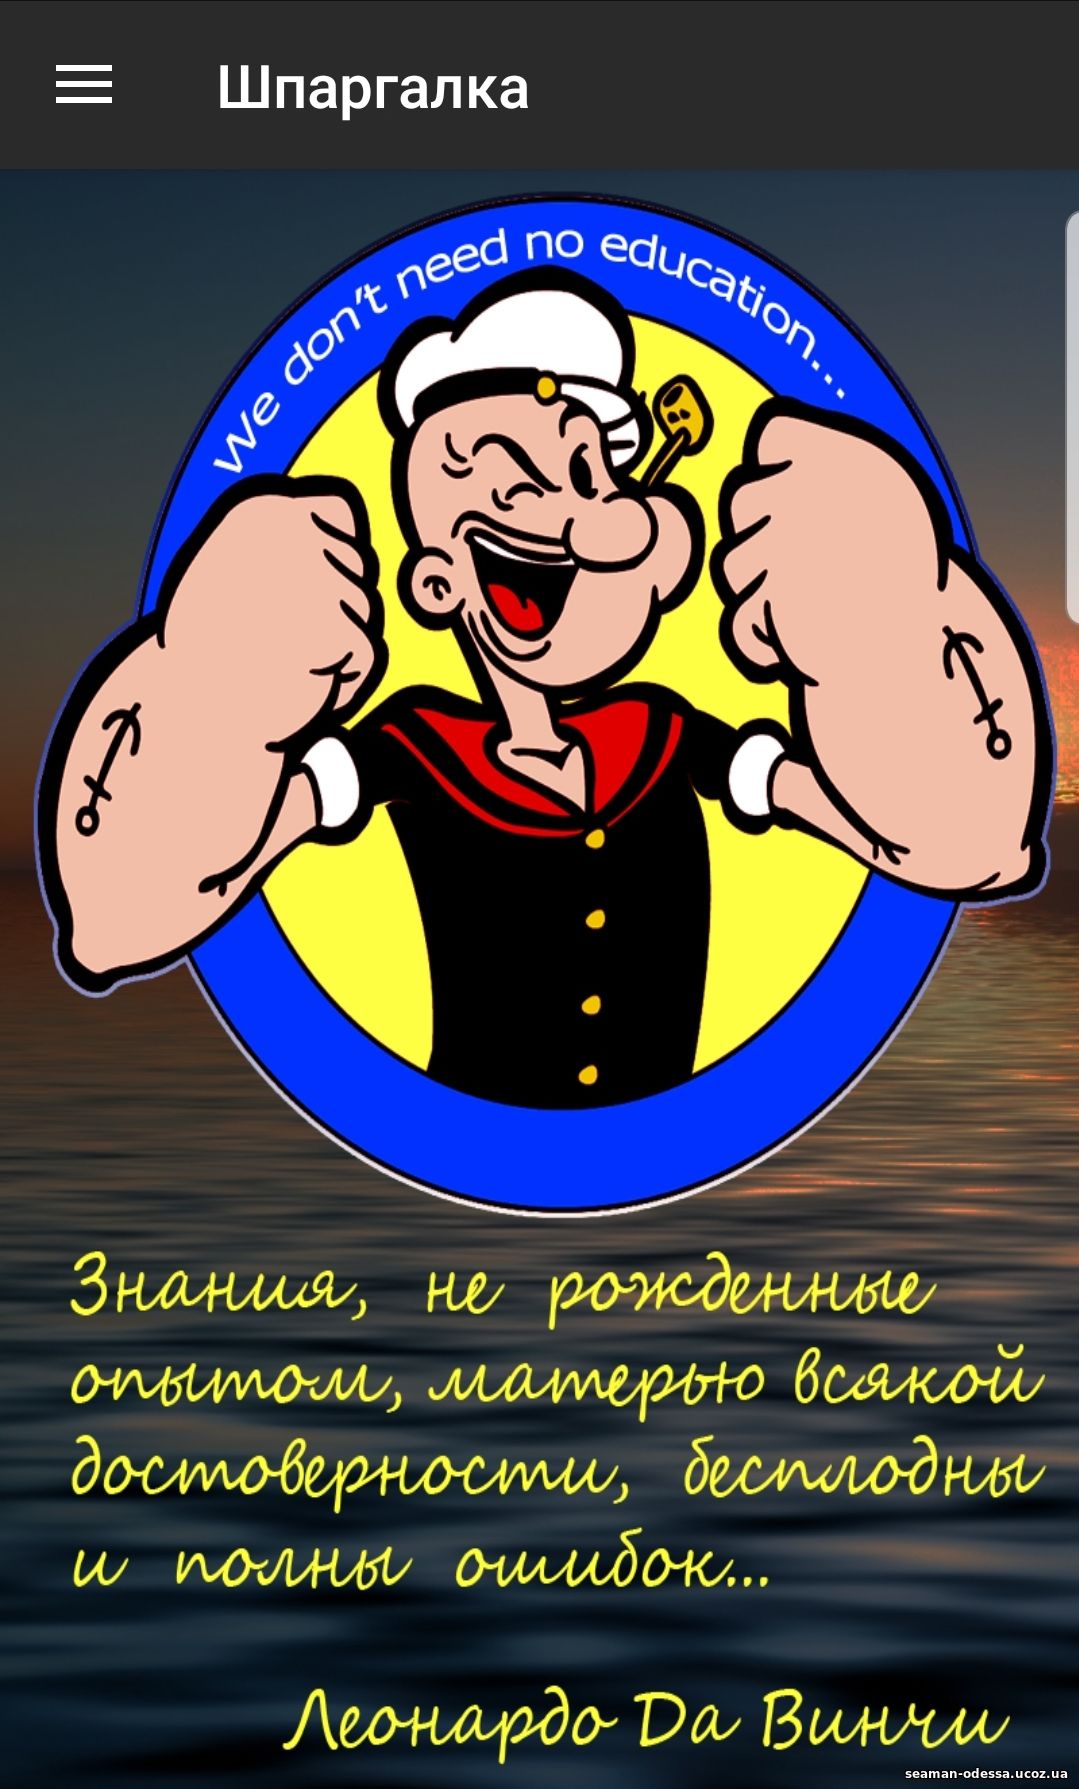 http://seaman-odessa.ucoz.ua/HLAM/shpargalka1.jpg